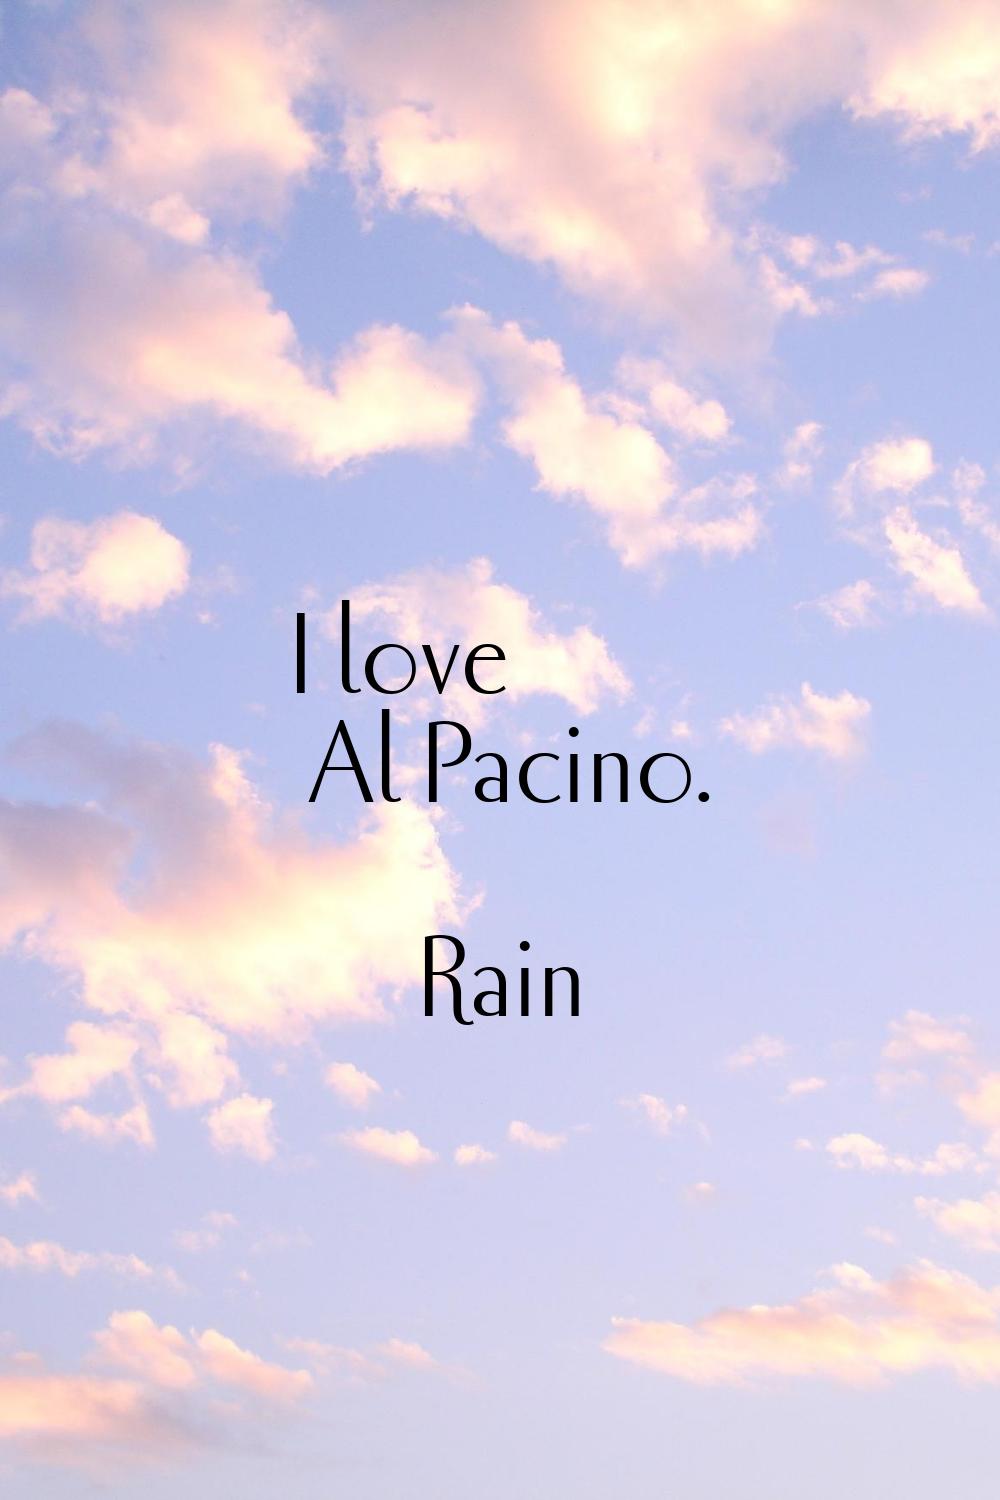 I love Al Pacino.